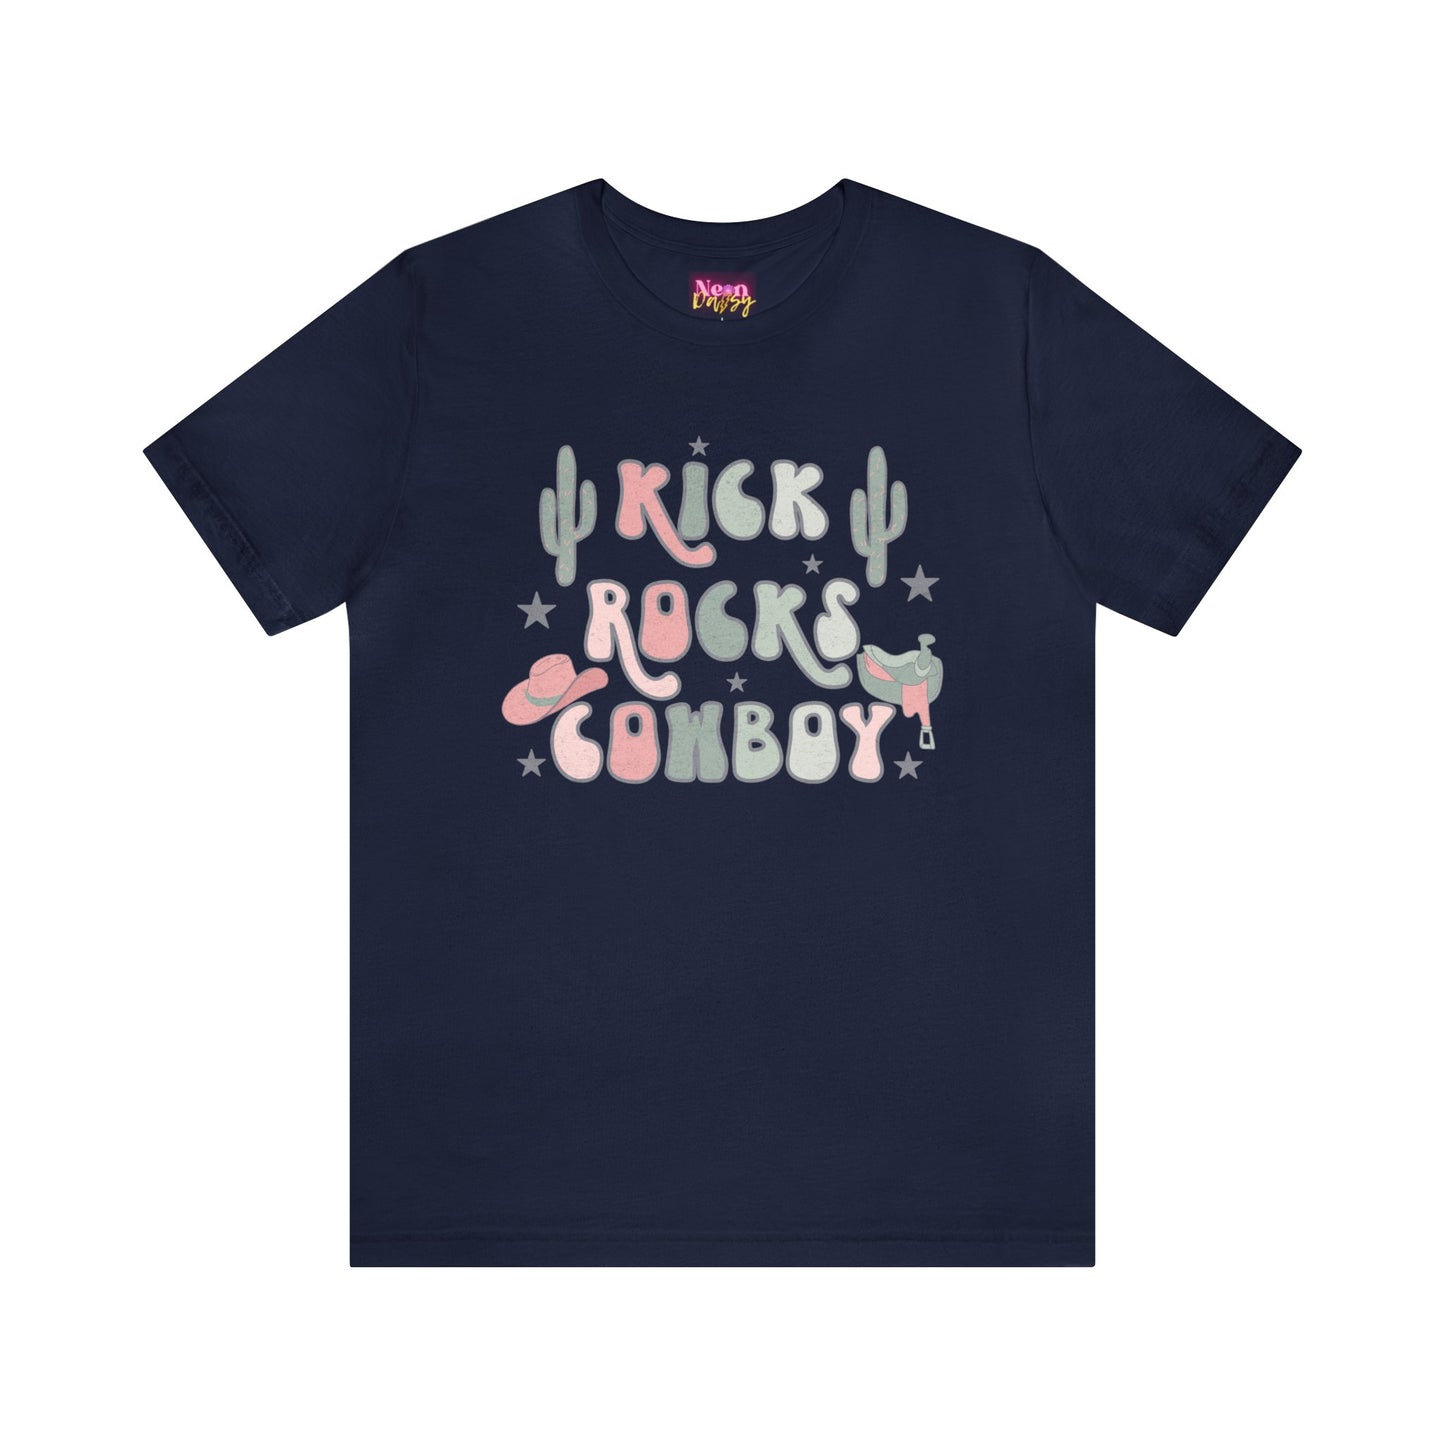 Kick Rocks Cowboy // TEE